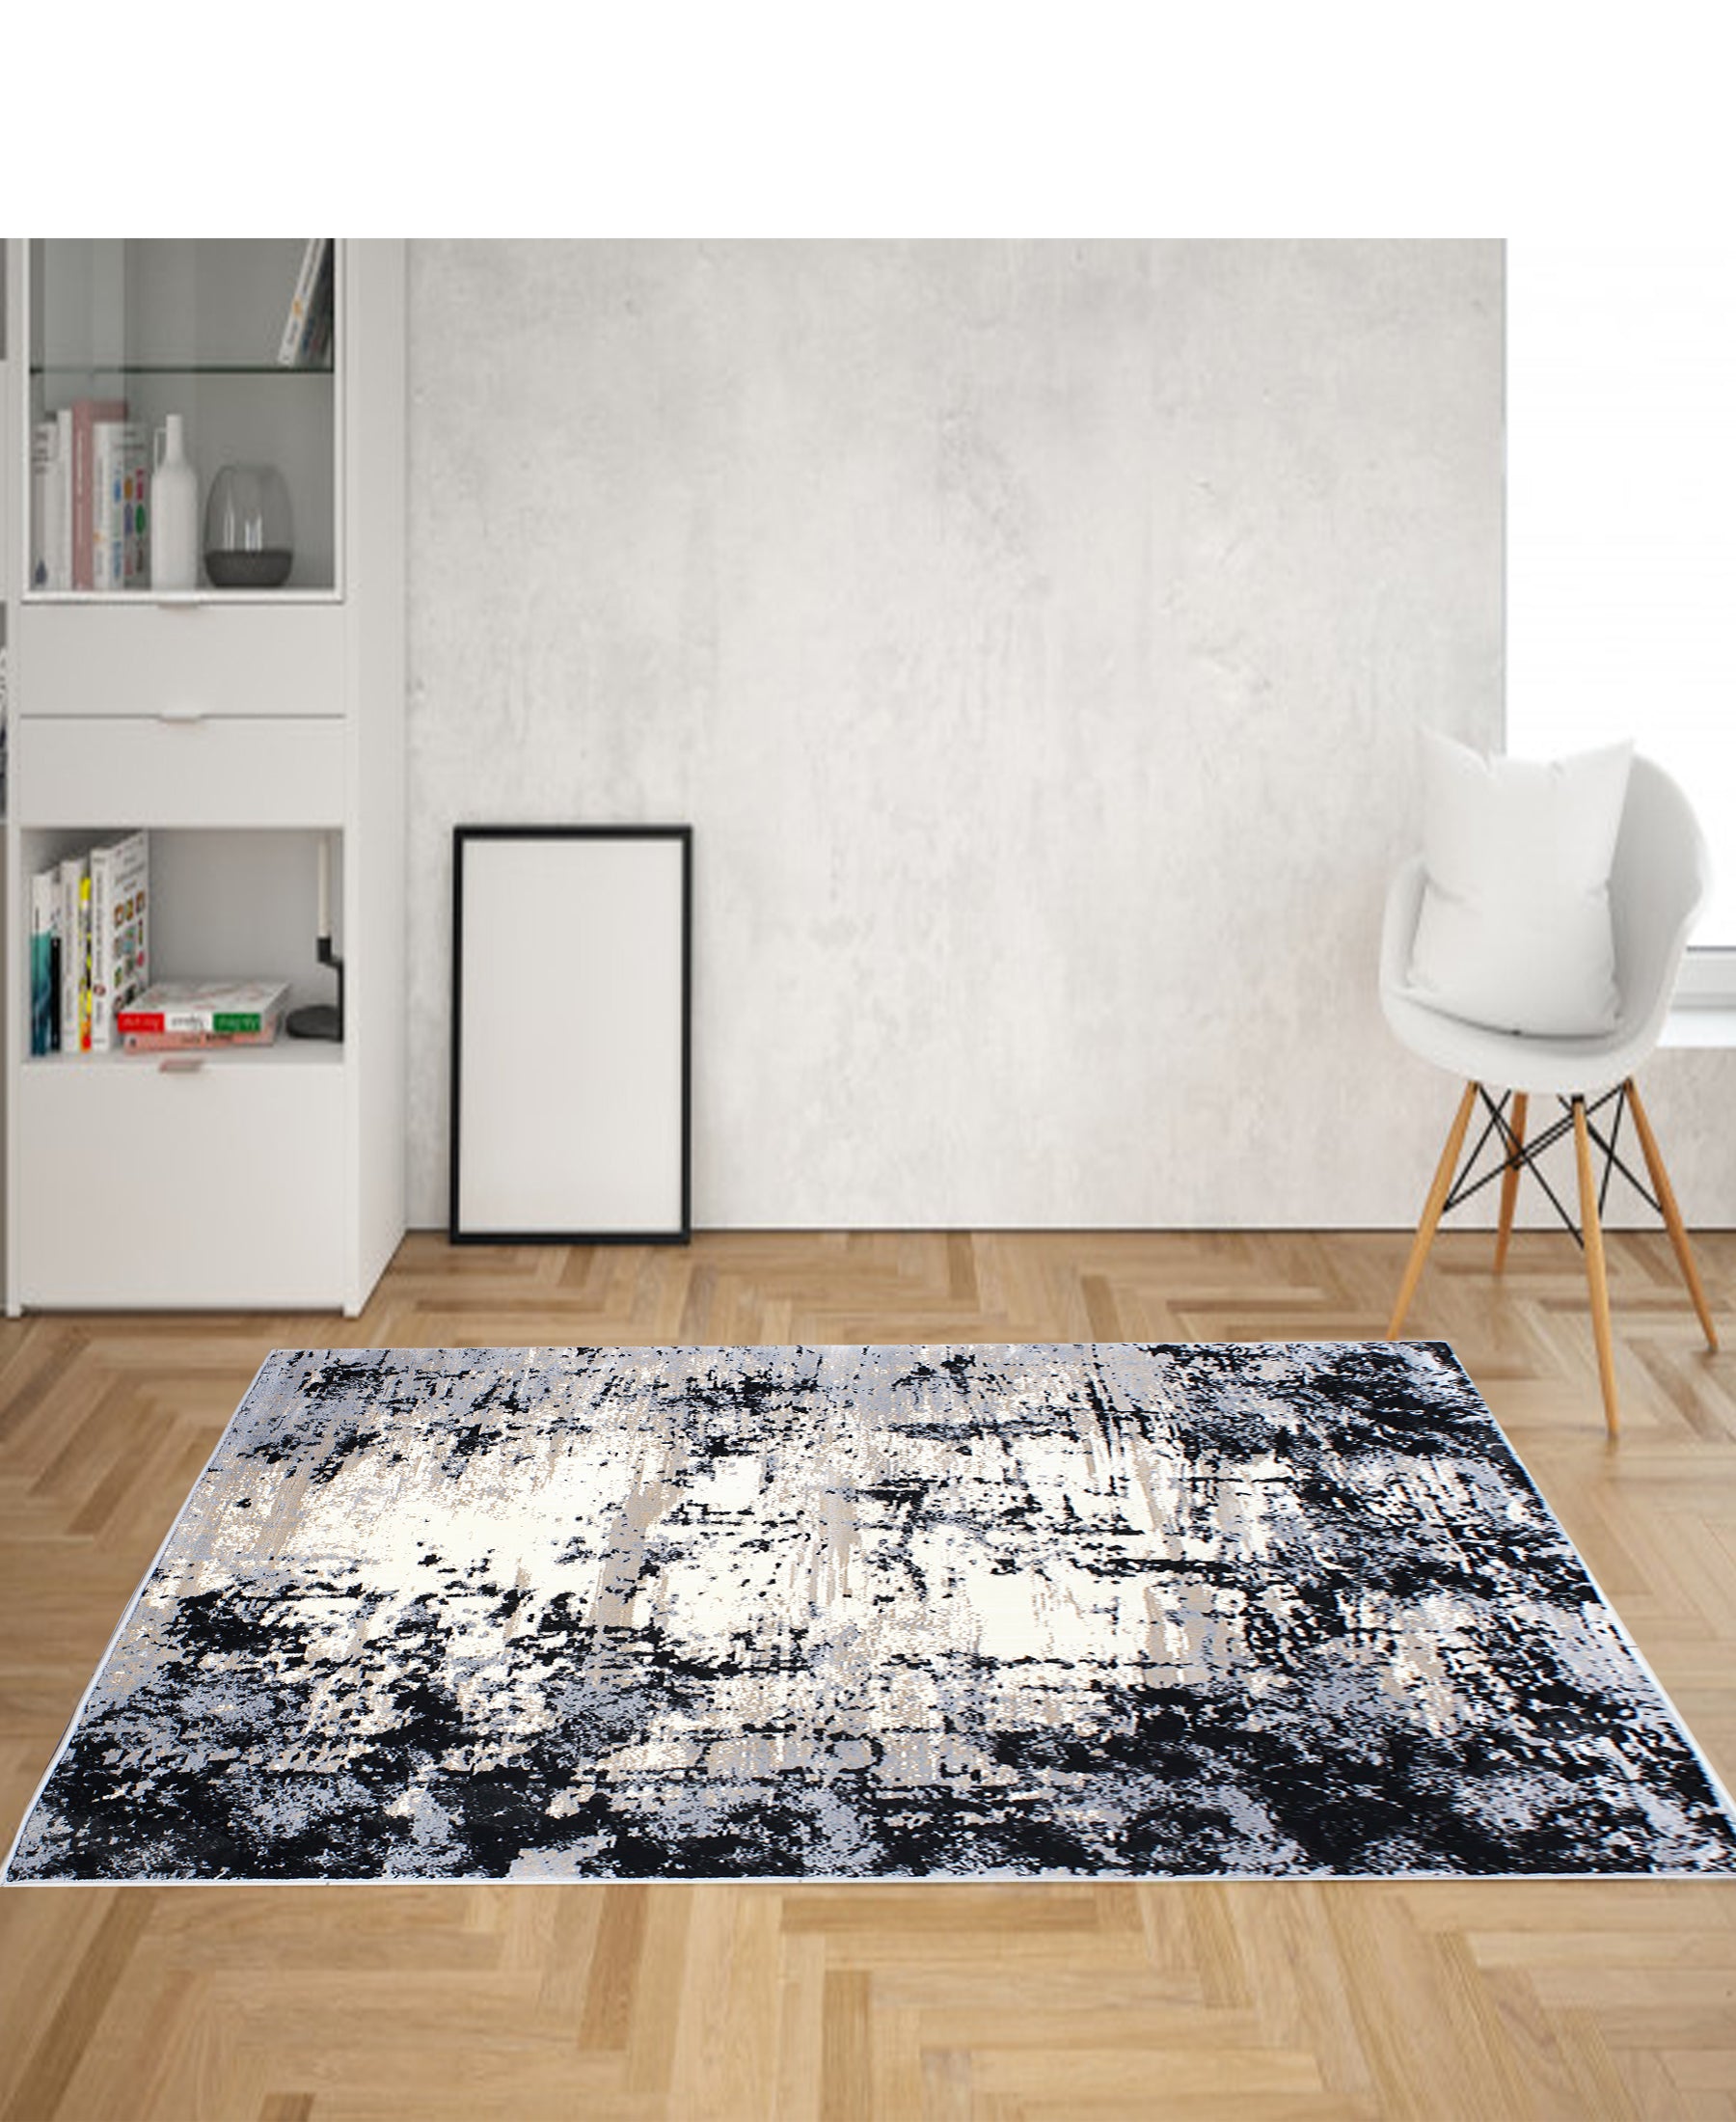 Damascus Shady Carpet 500mm x 800mm - Black & Grey